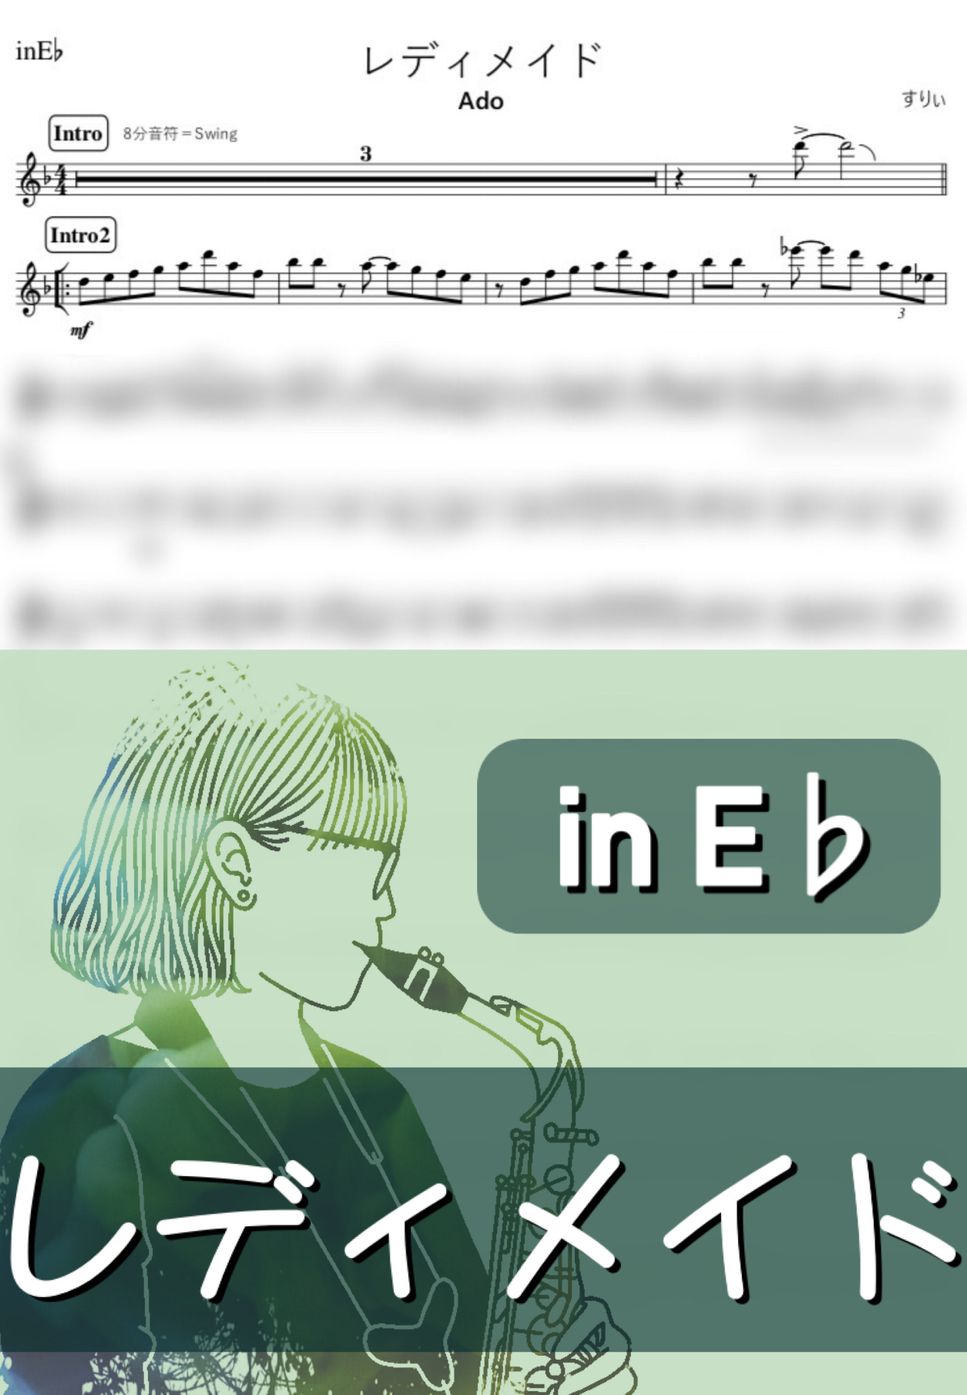 Ado - レディメイド (E♭) by kanamusic